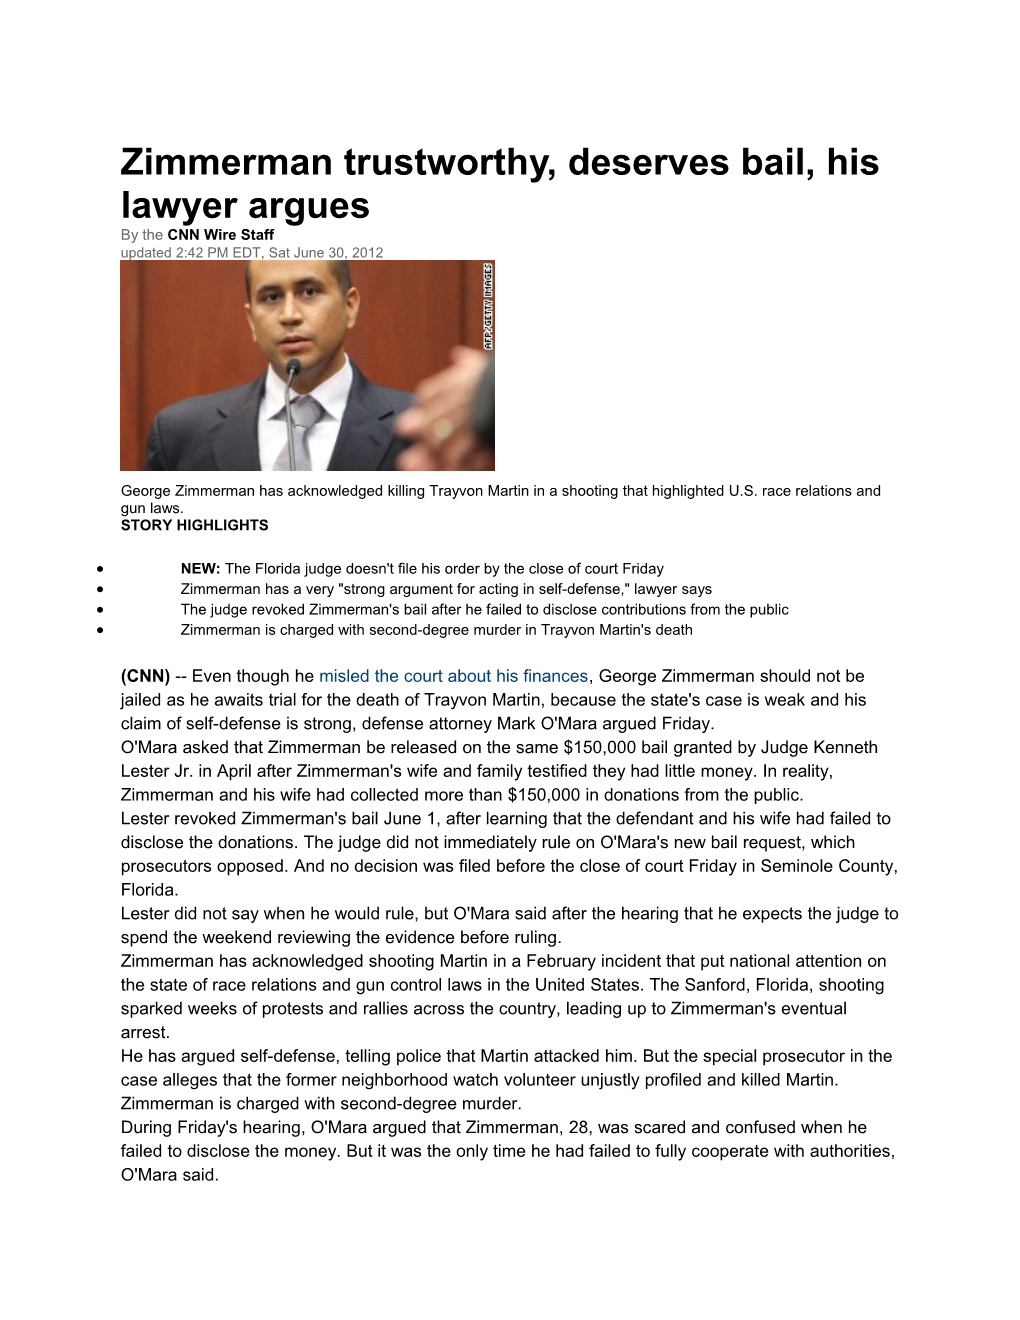 Zimmerman Trustworthy, Deserves Bail, His Lawyer Argues